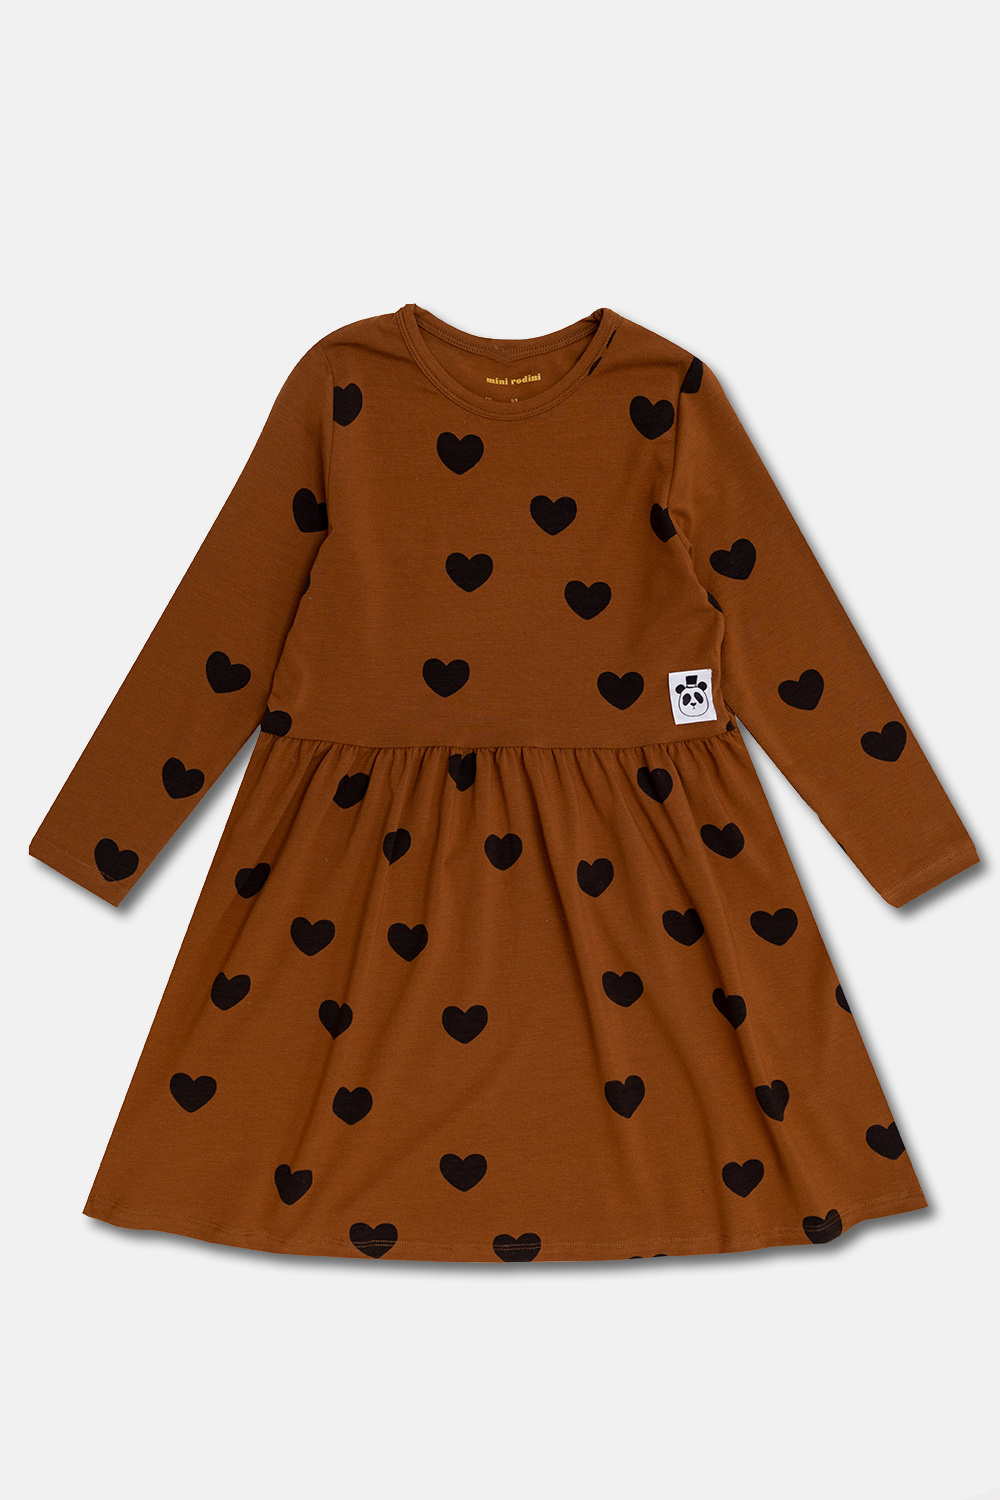 Mini Rodini Dress with hearts print